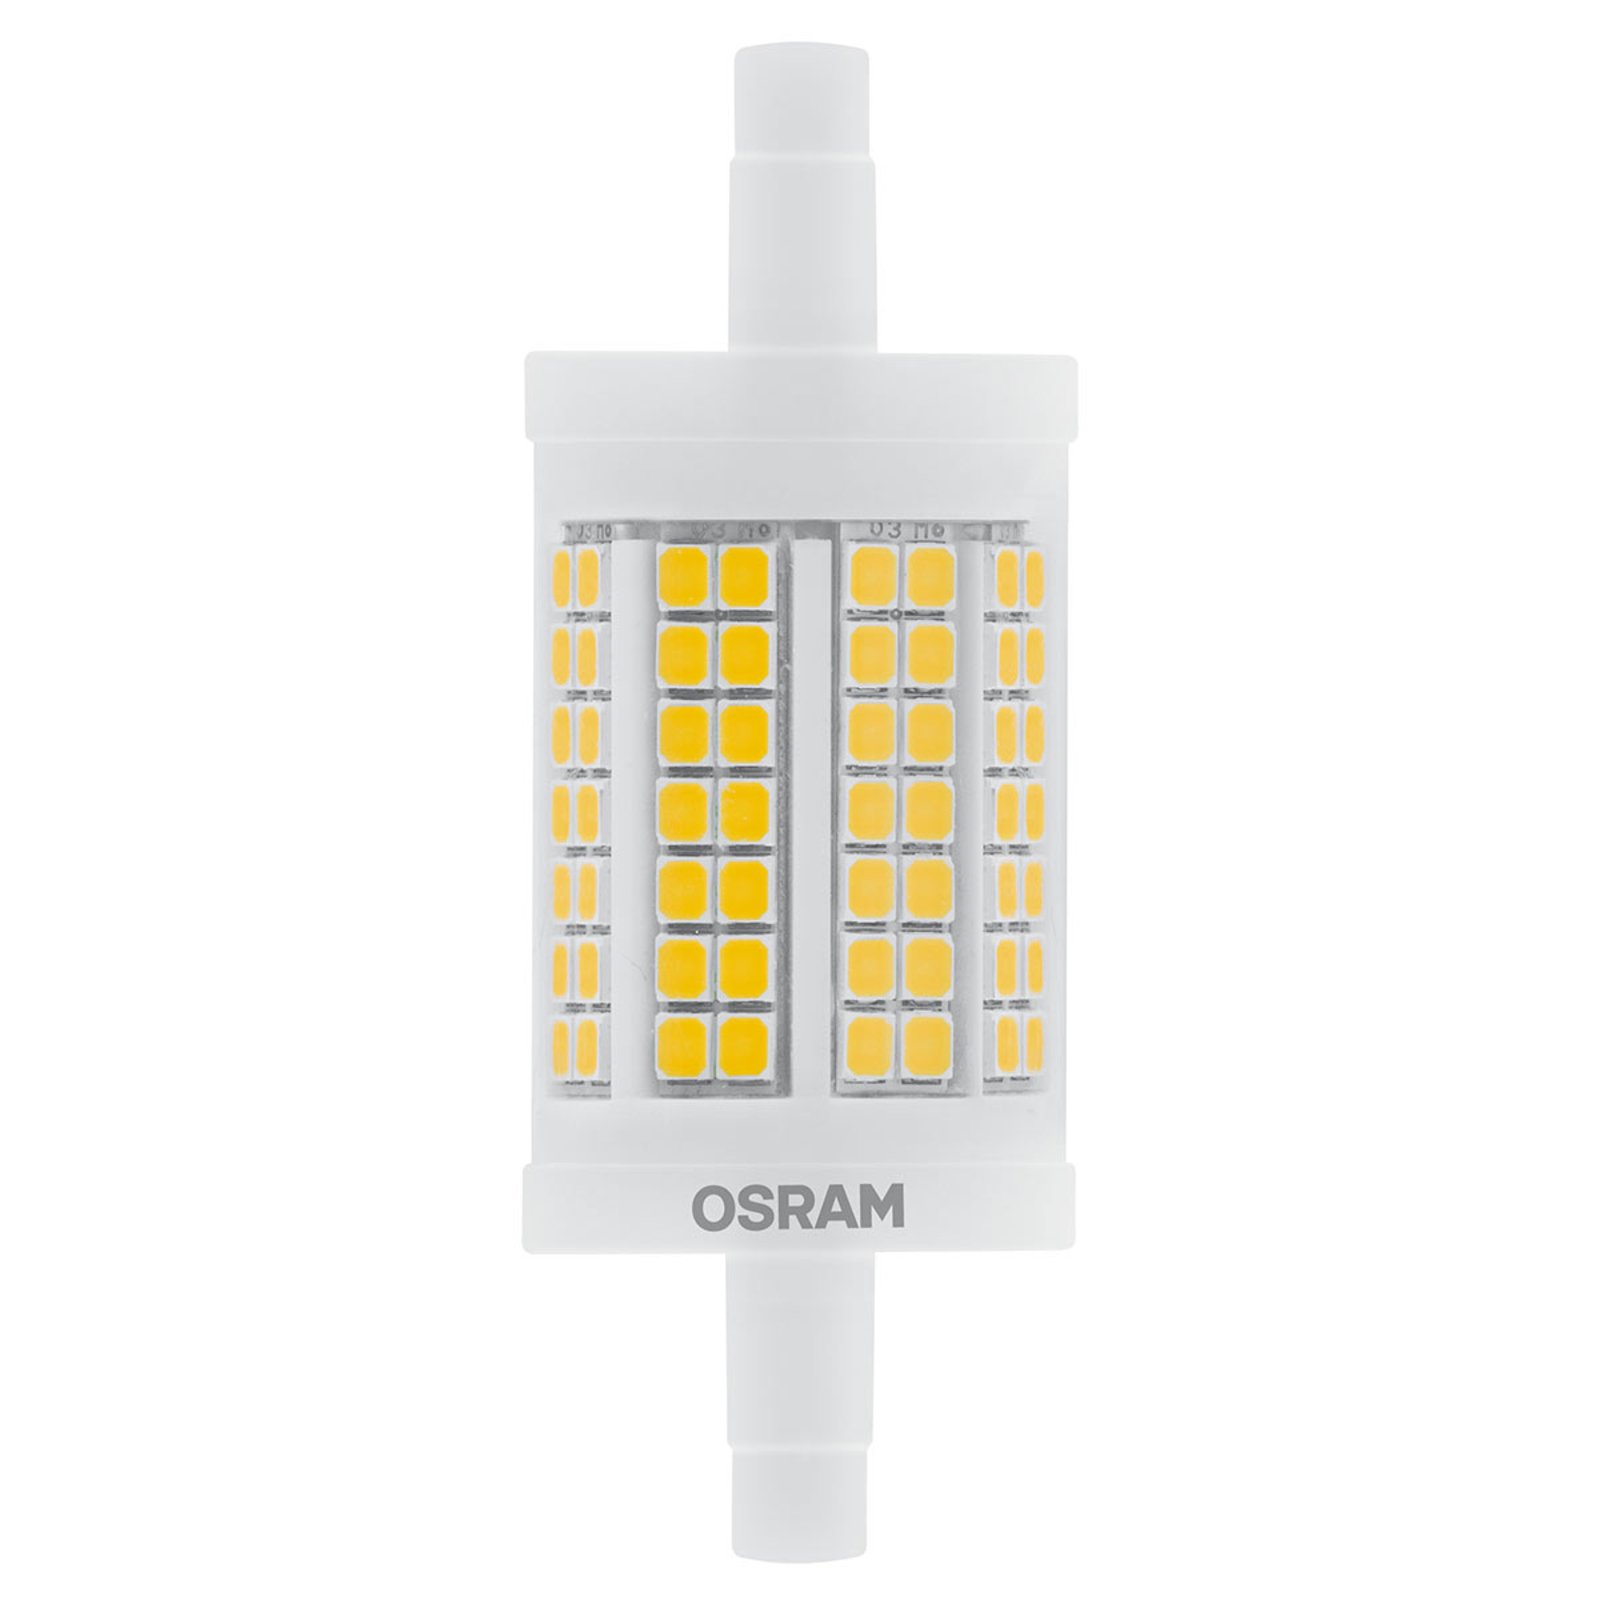 OSRAM bombilla tubular LED R7s 11,5W blanco cálido, 1.521 lm